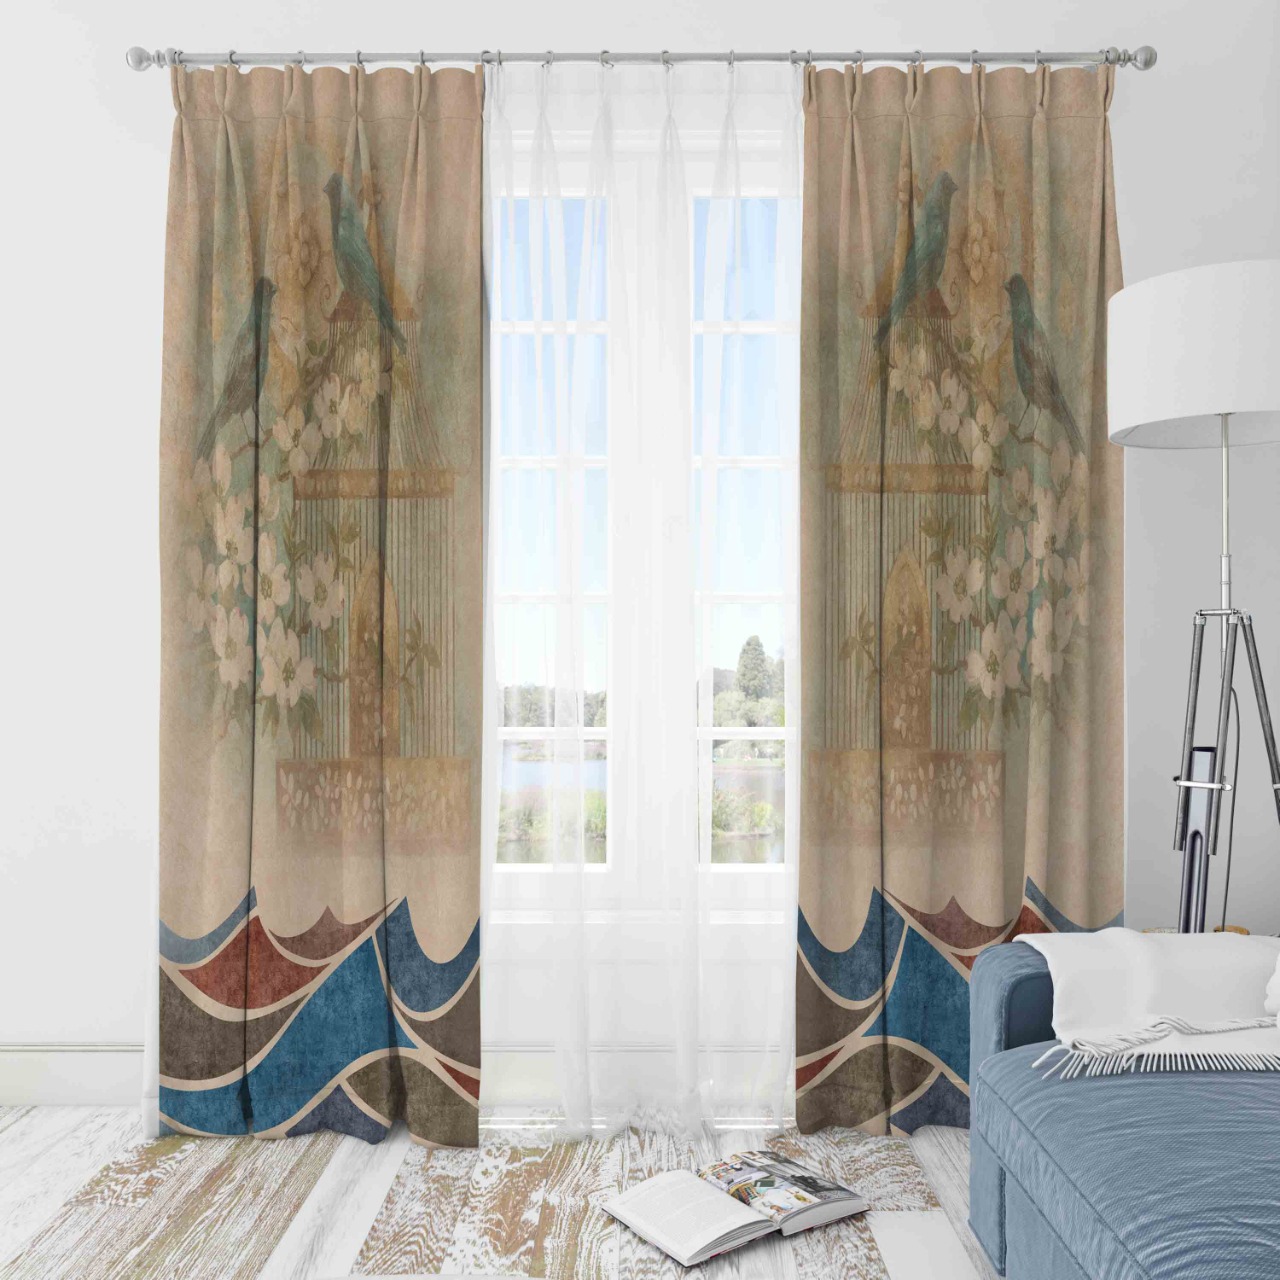 Customize Fabric Curtain price per sq foot